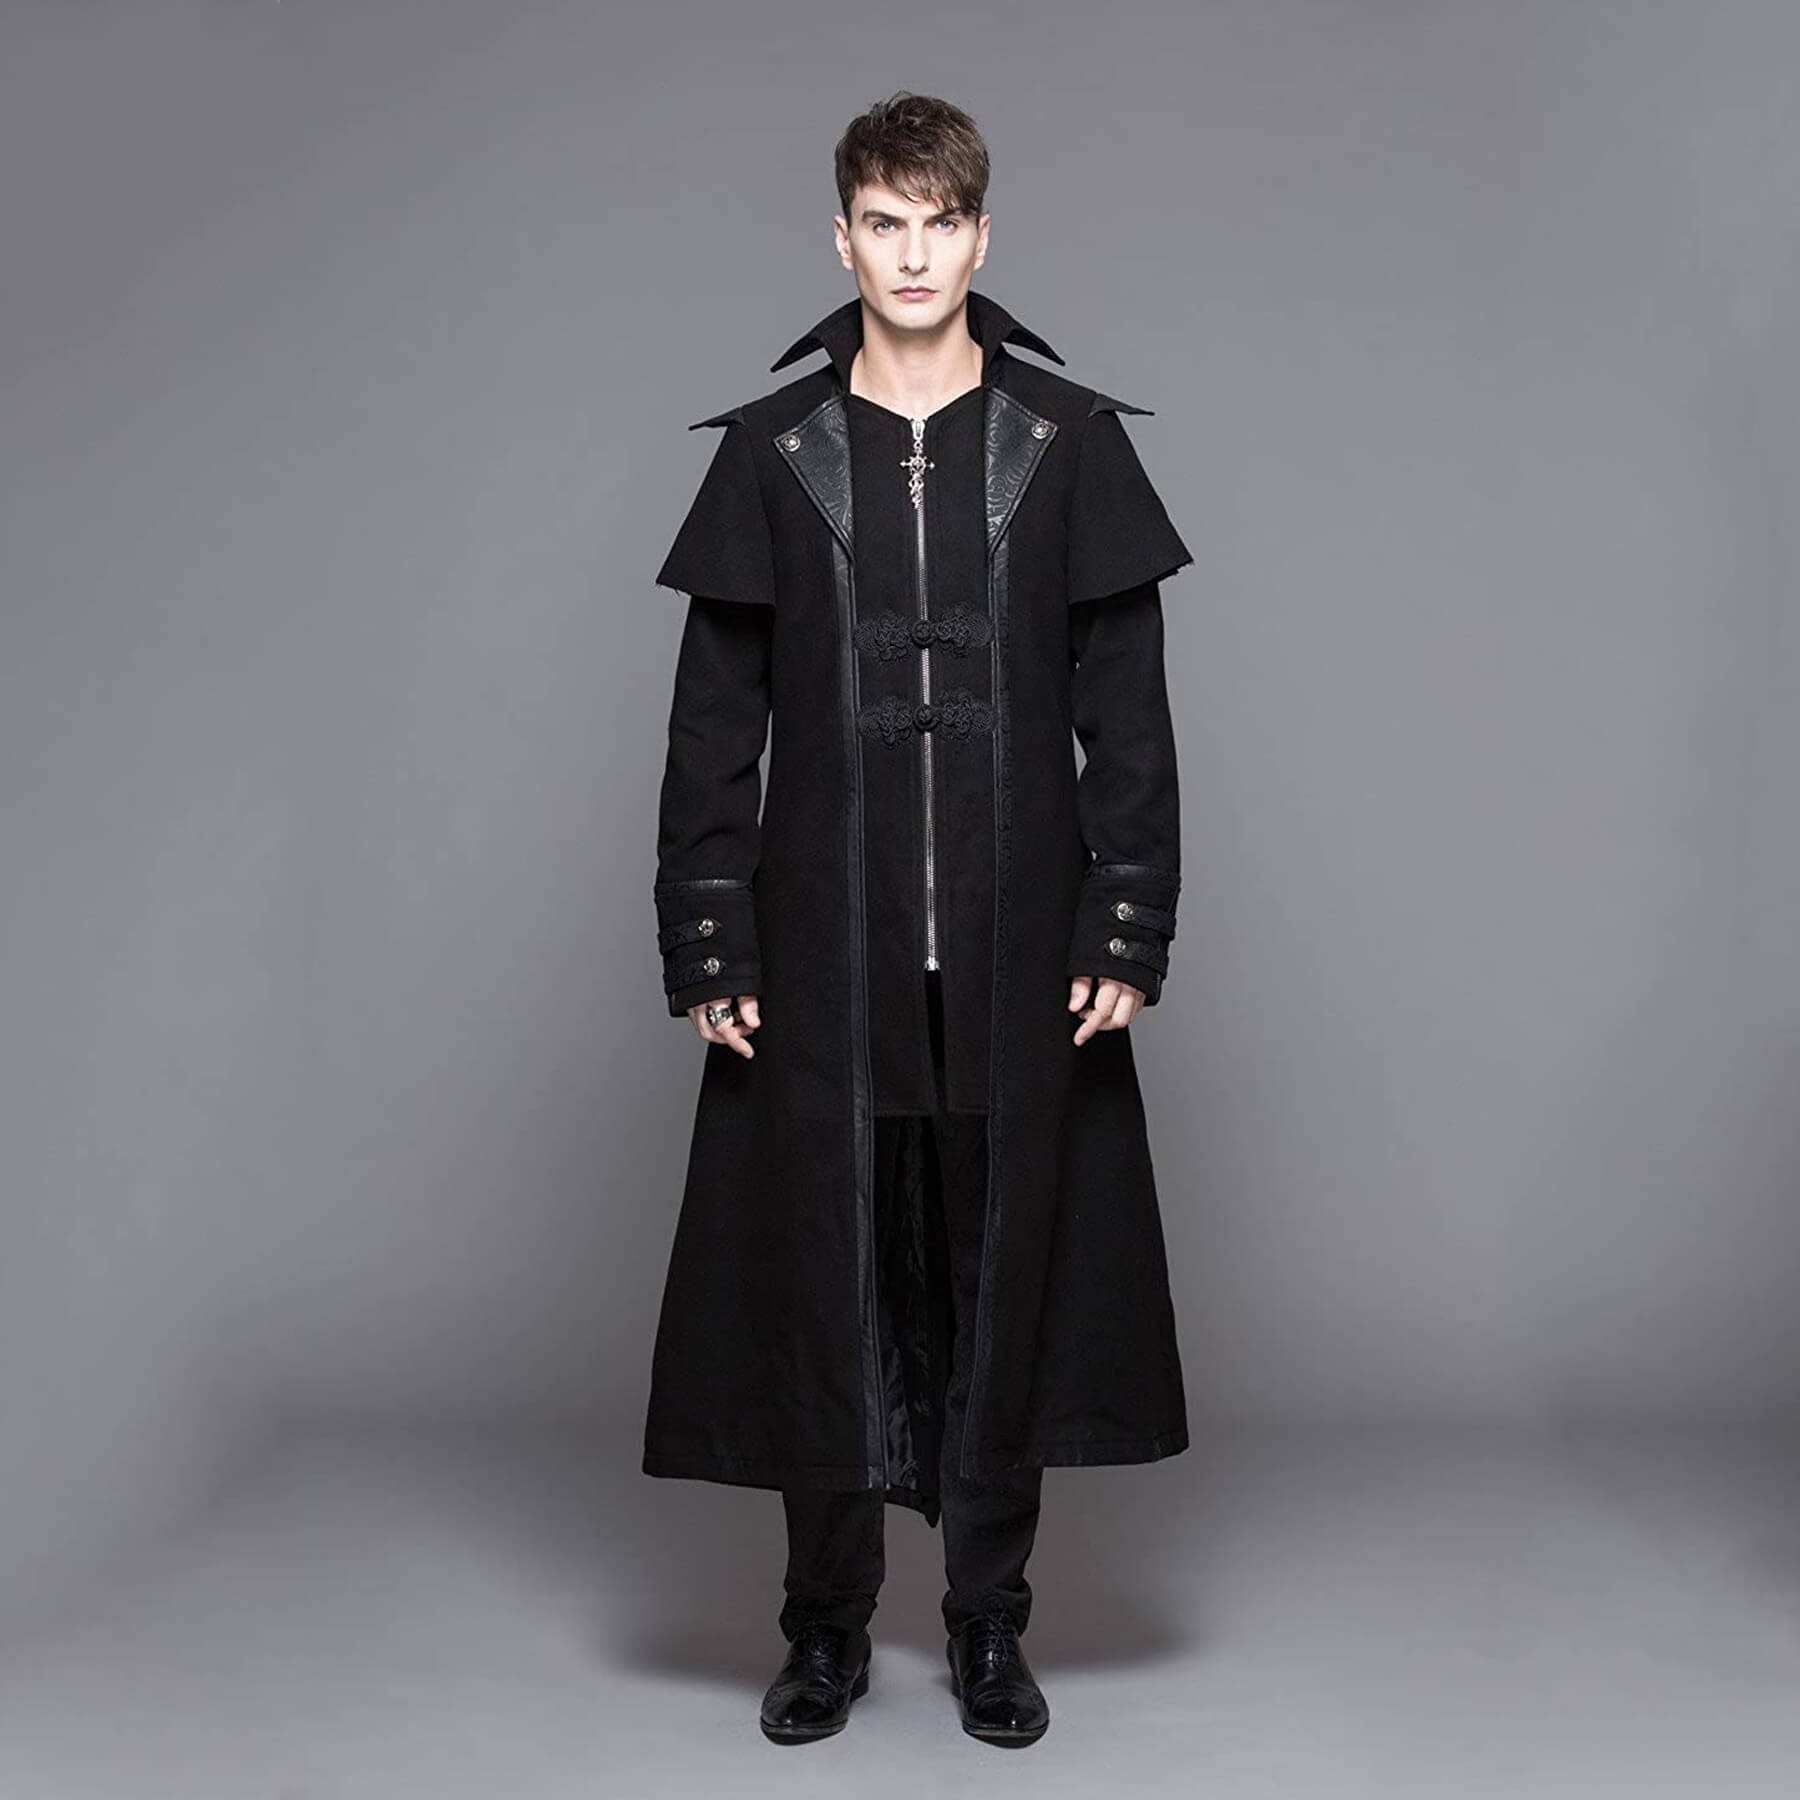 man-wearing-a-black-medieval-long-coat-in-grey-background_DDCJCT